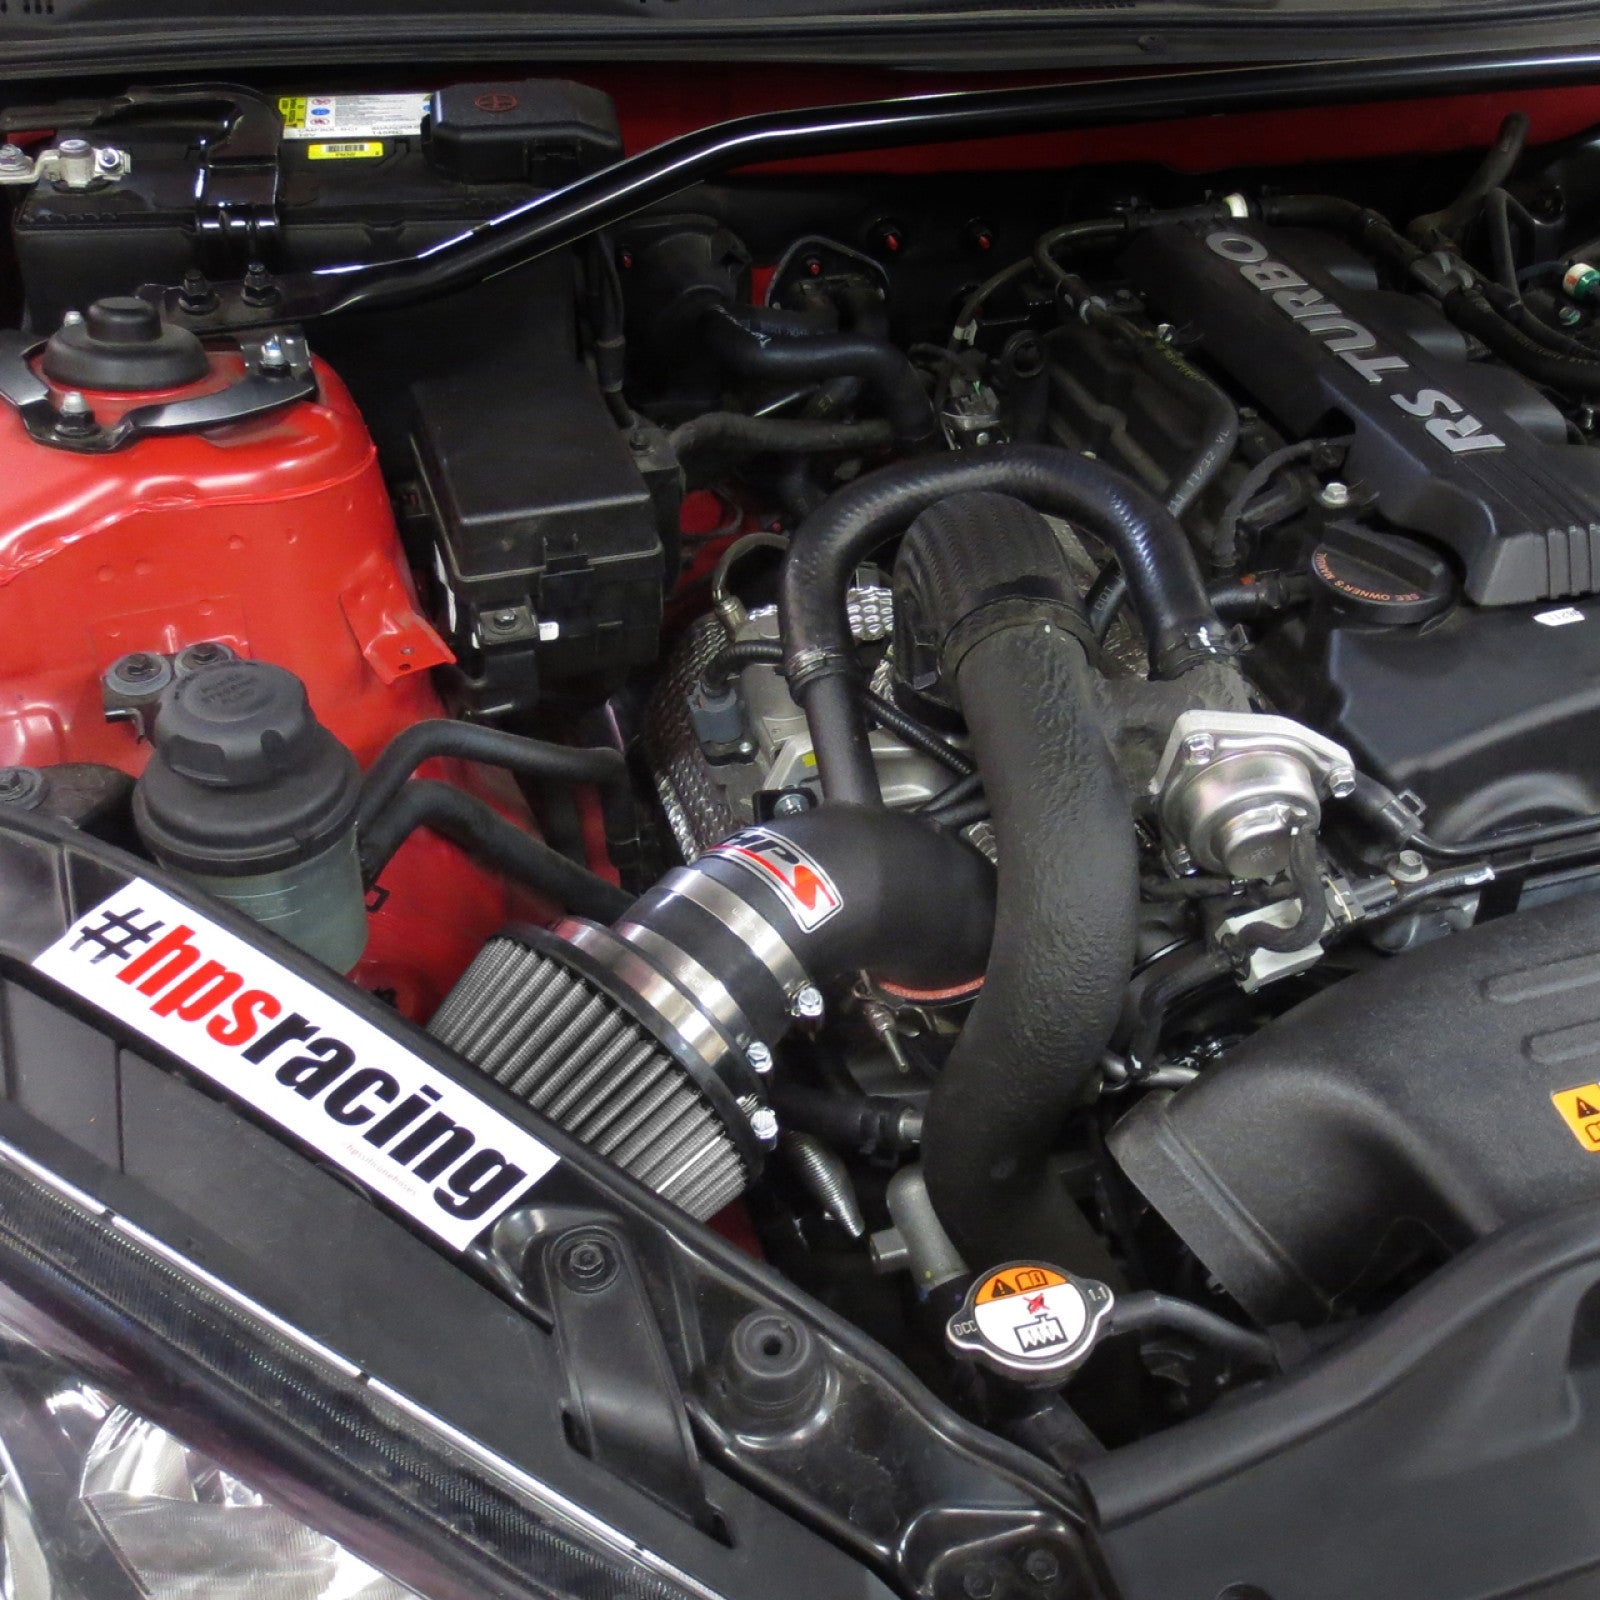 HPS Performance Black Shortram Air Intake for 13-14 Hyundai Genesis Coupe Turbo